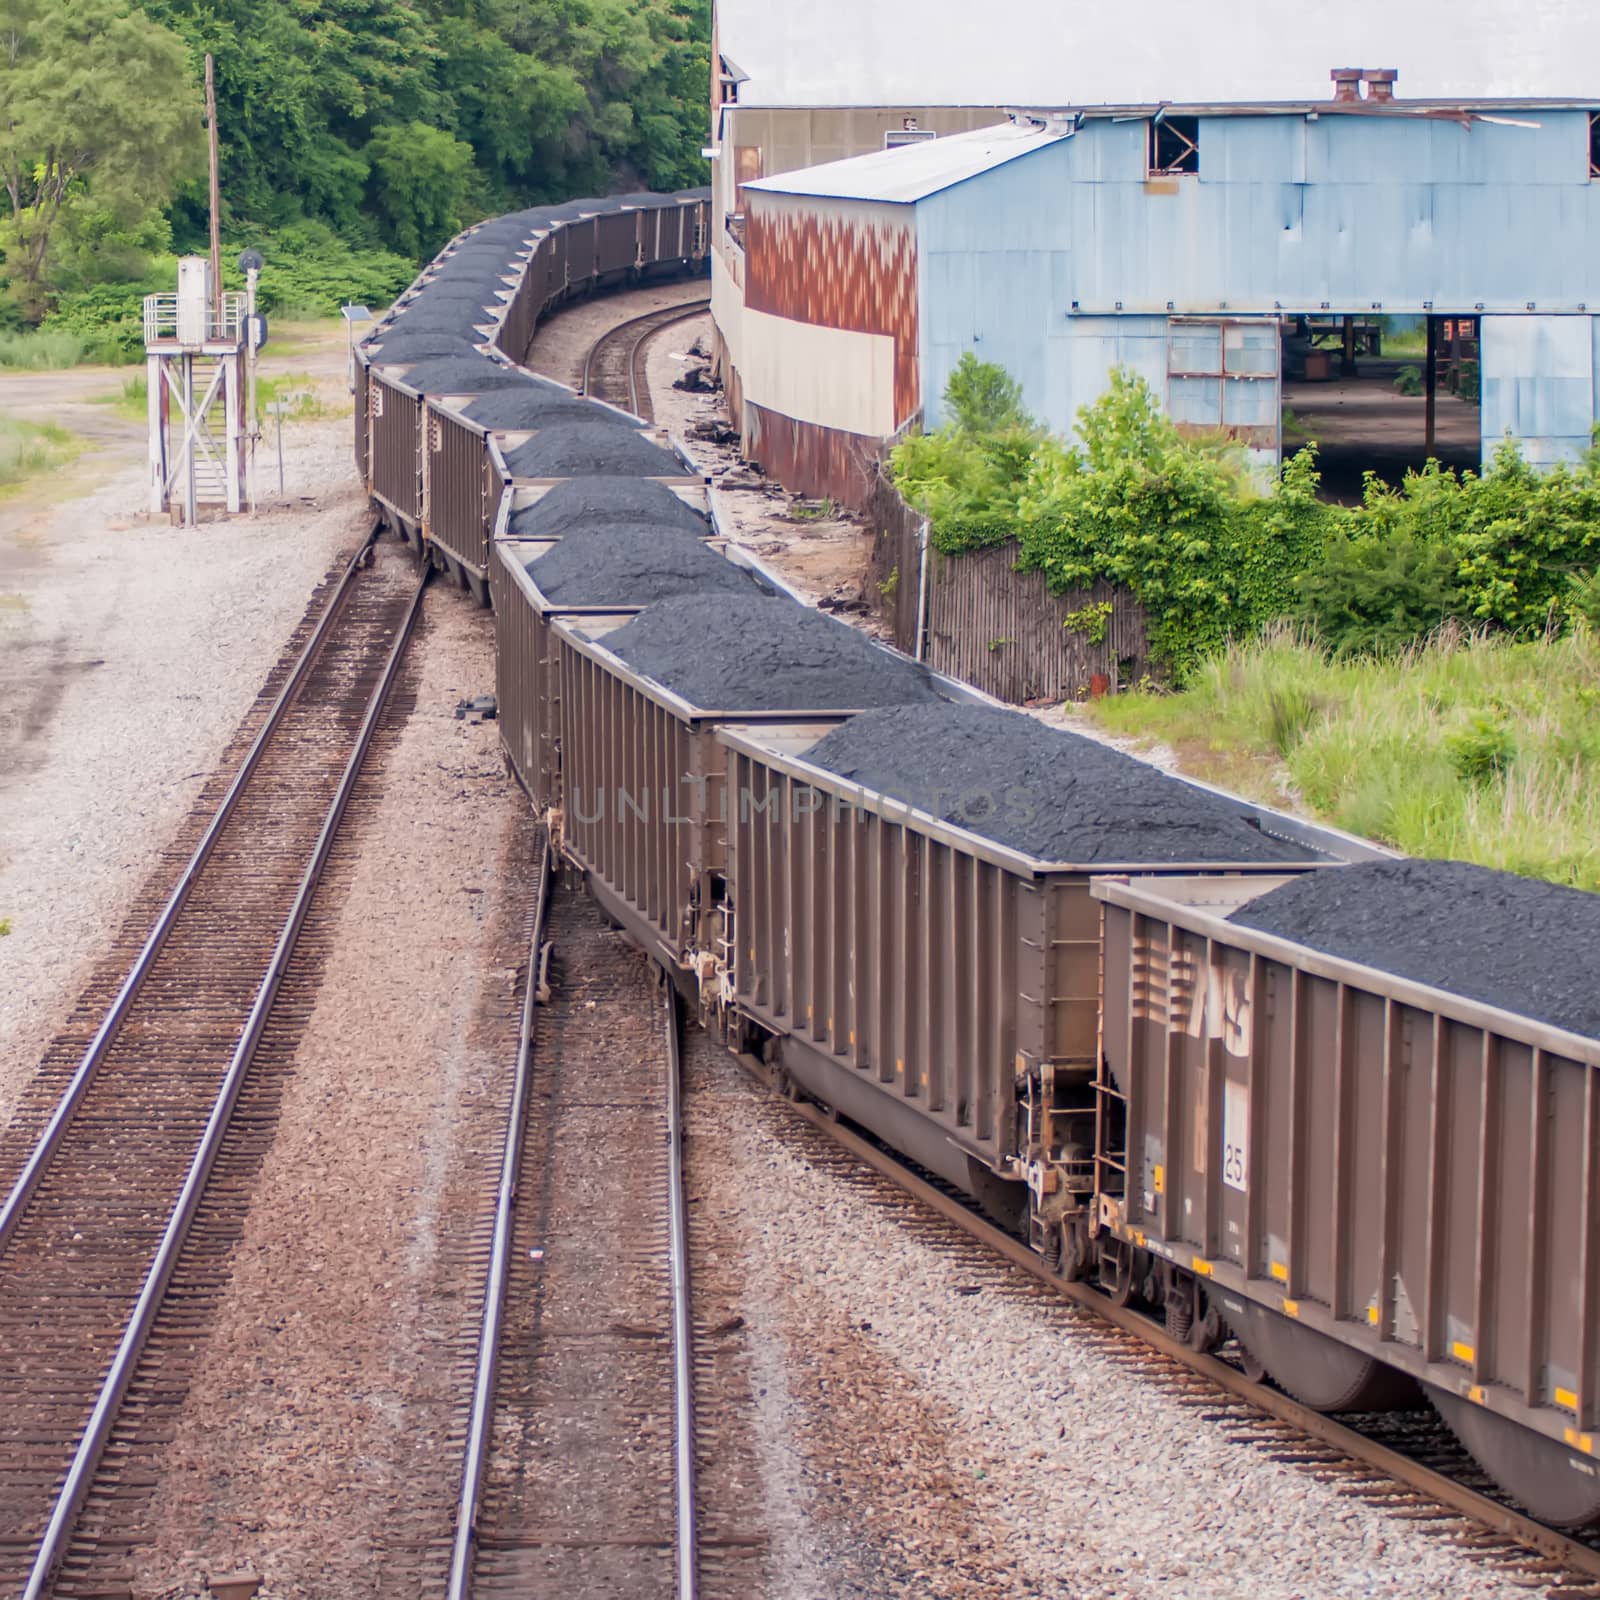 slow moving Coal wagons on railway tracks by digidreamgrafix